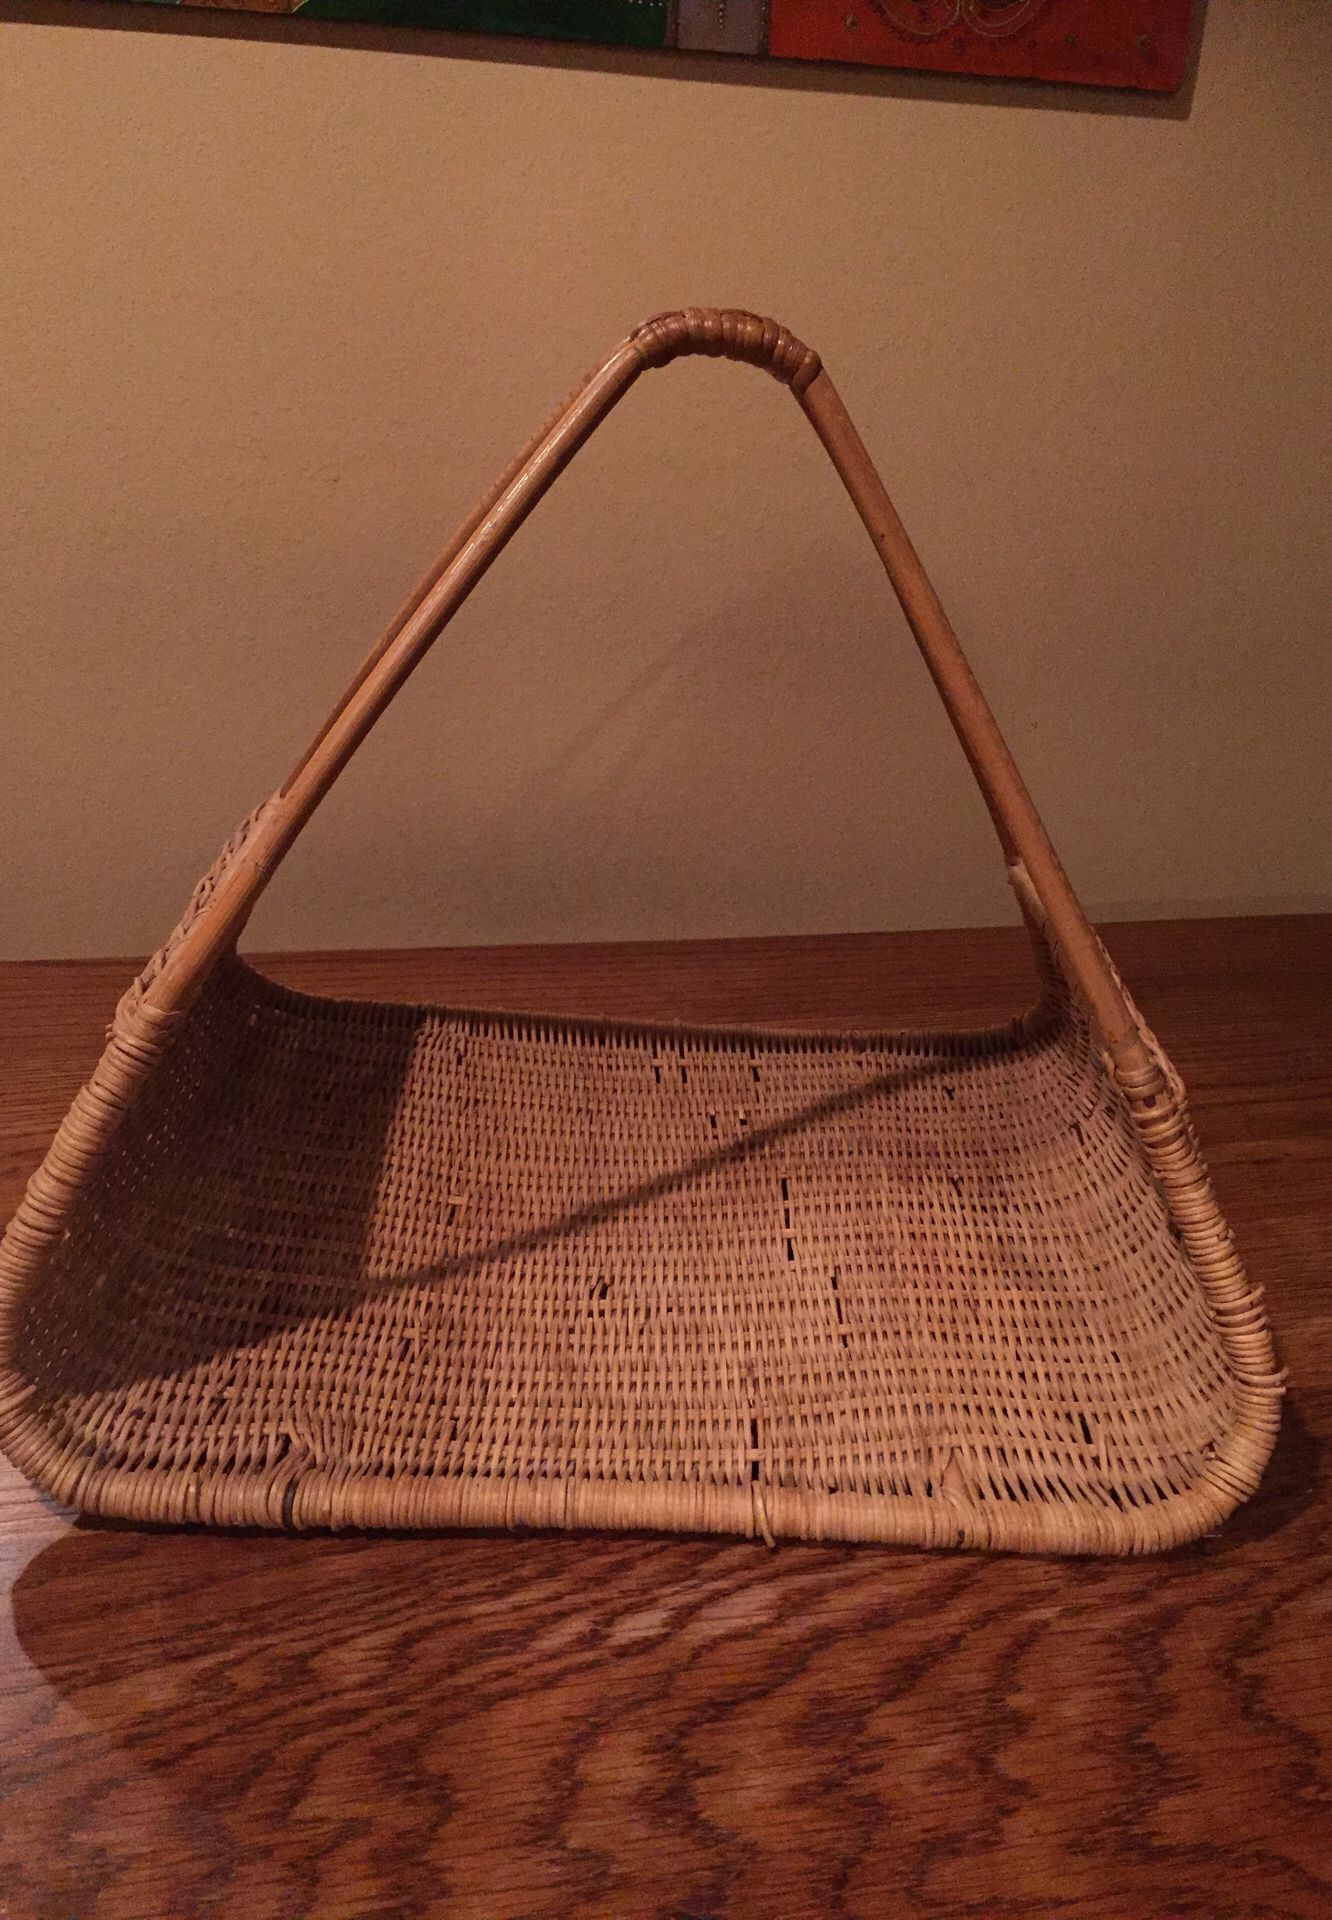 Vintage wicker rattan handled basket